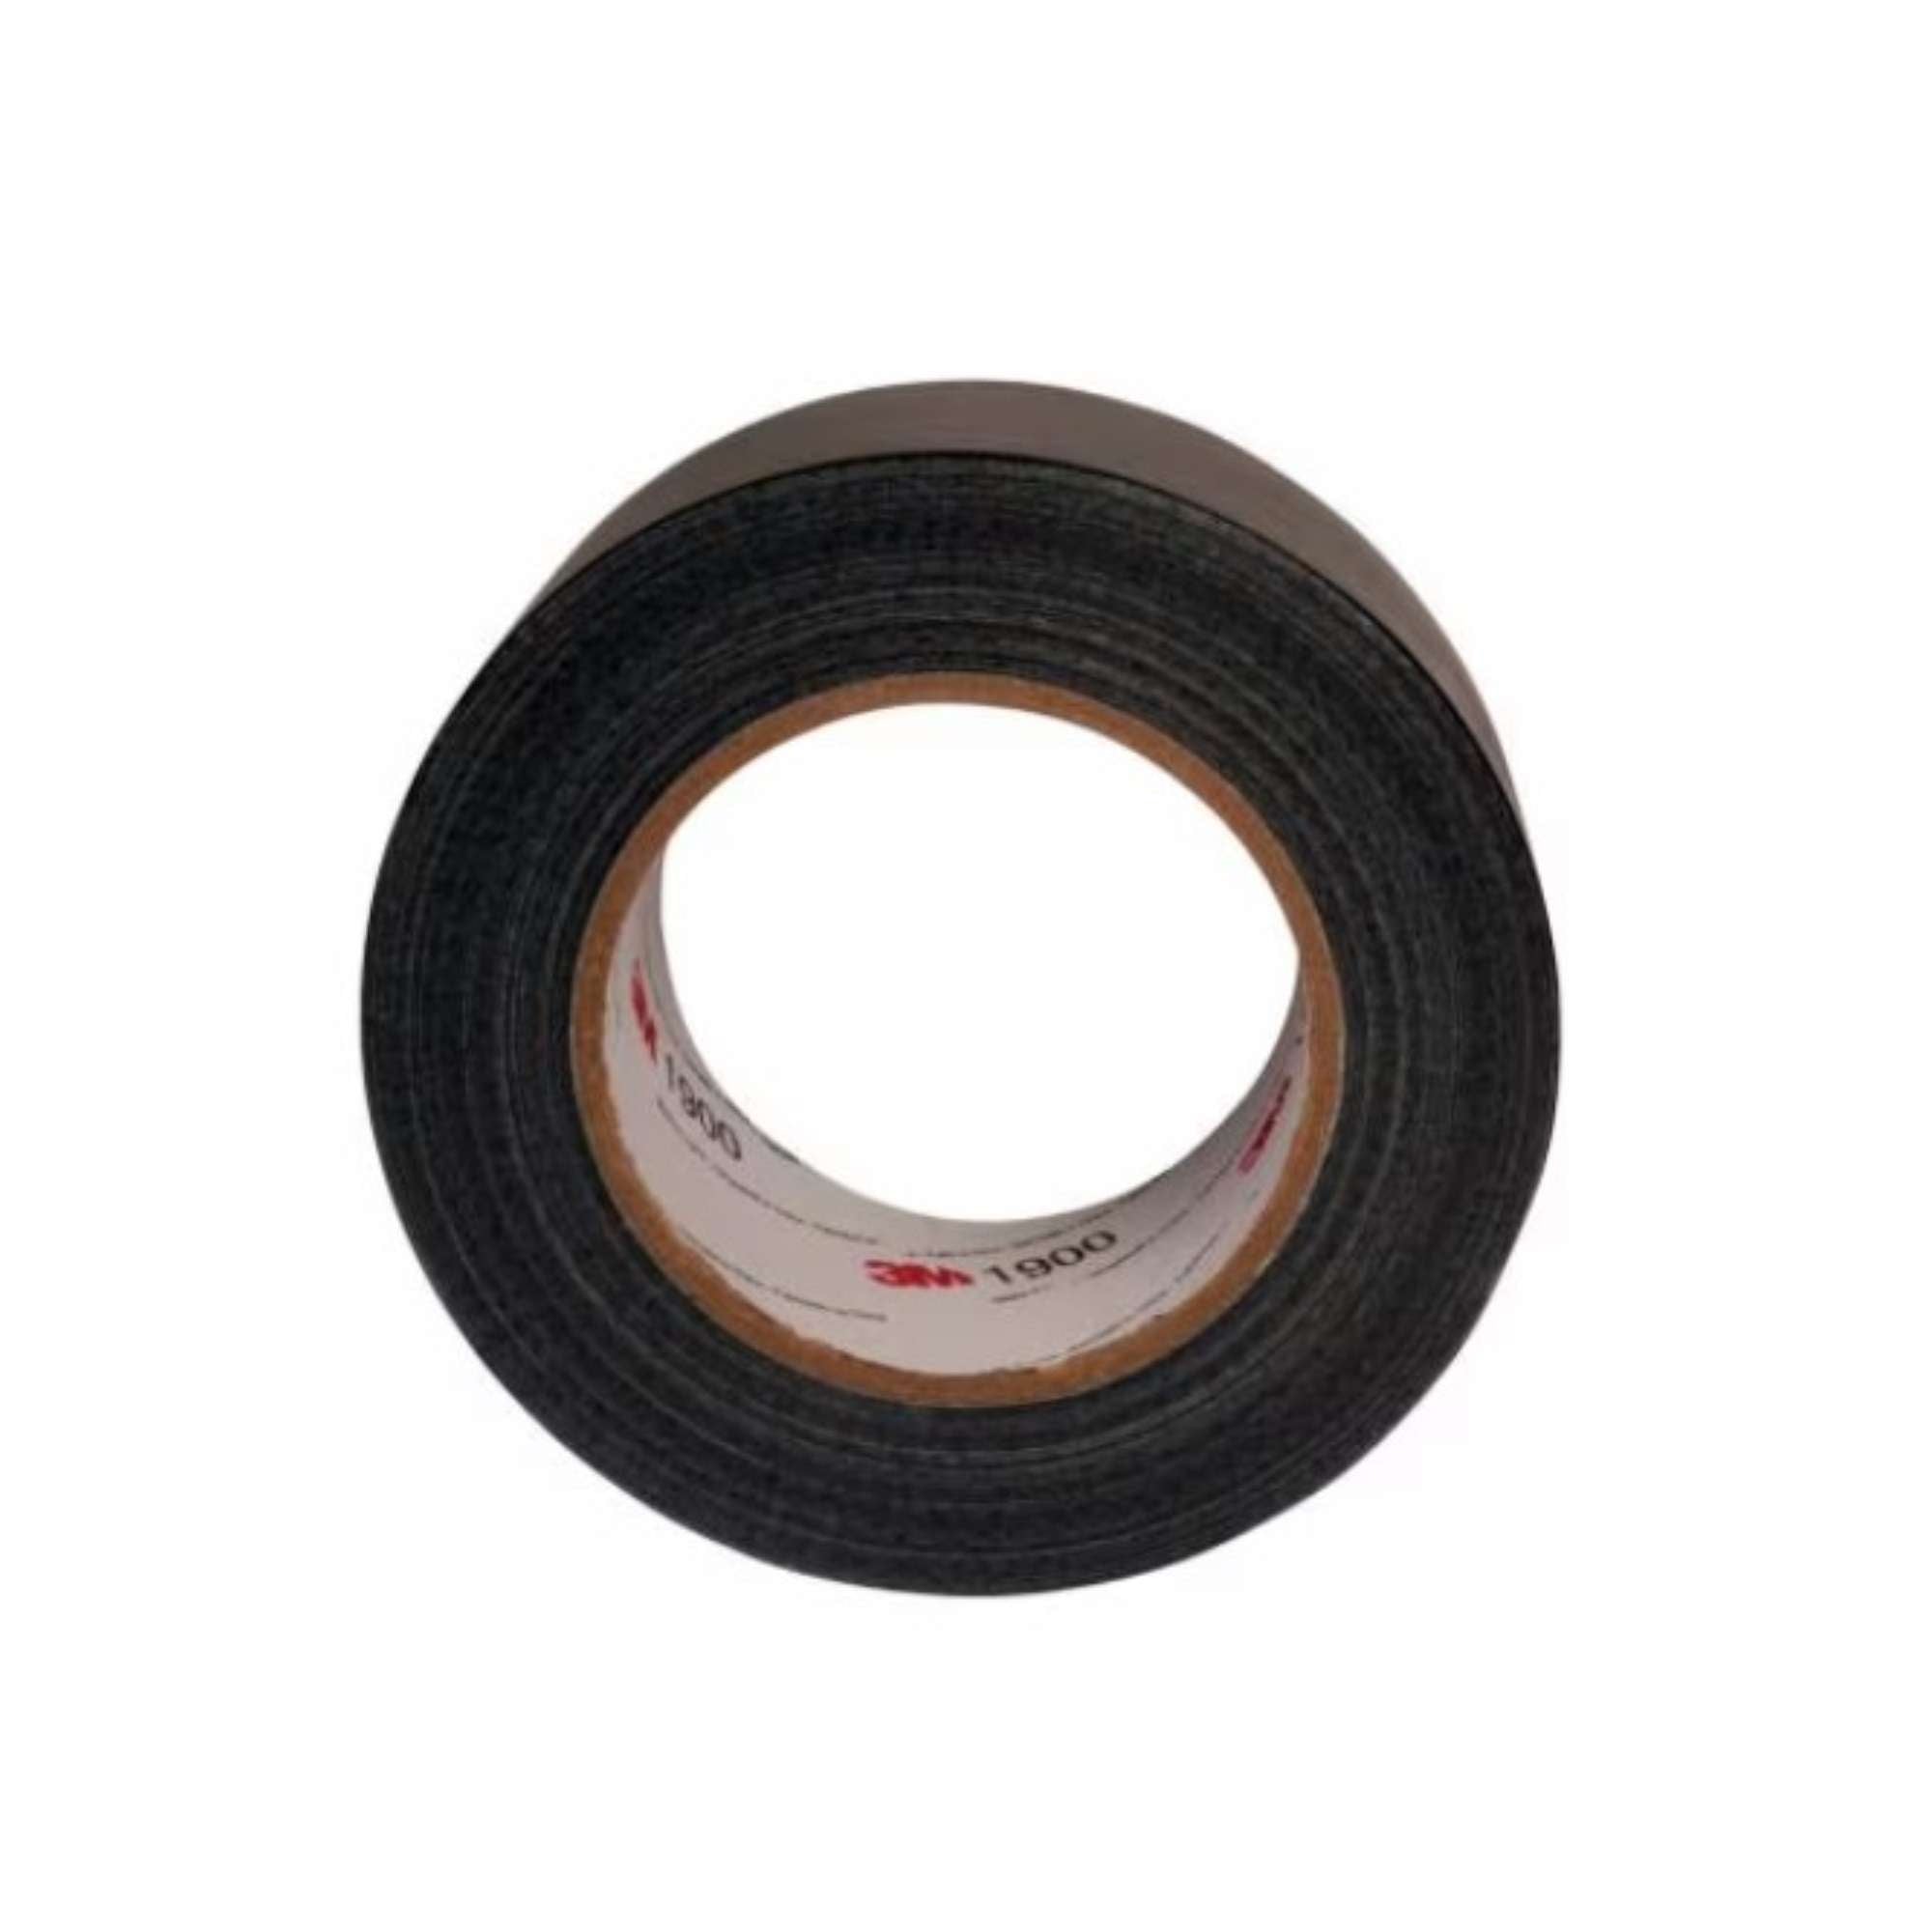 1900DT 50mmx50mt black tarp adhesive tape - 3M 7000071798